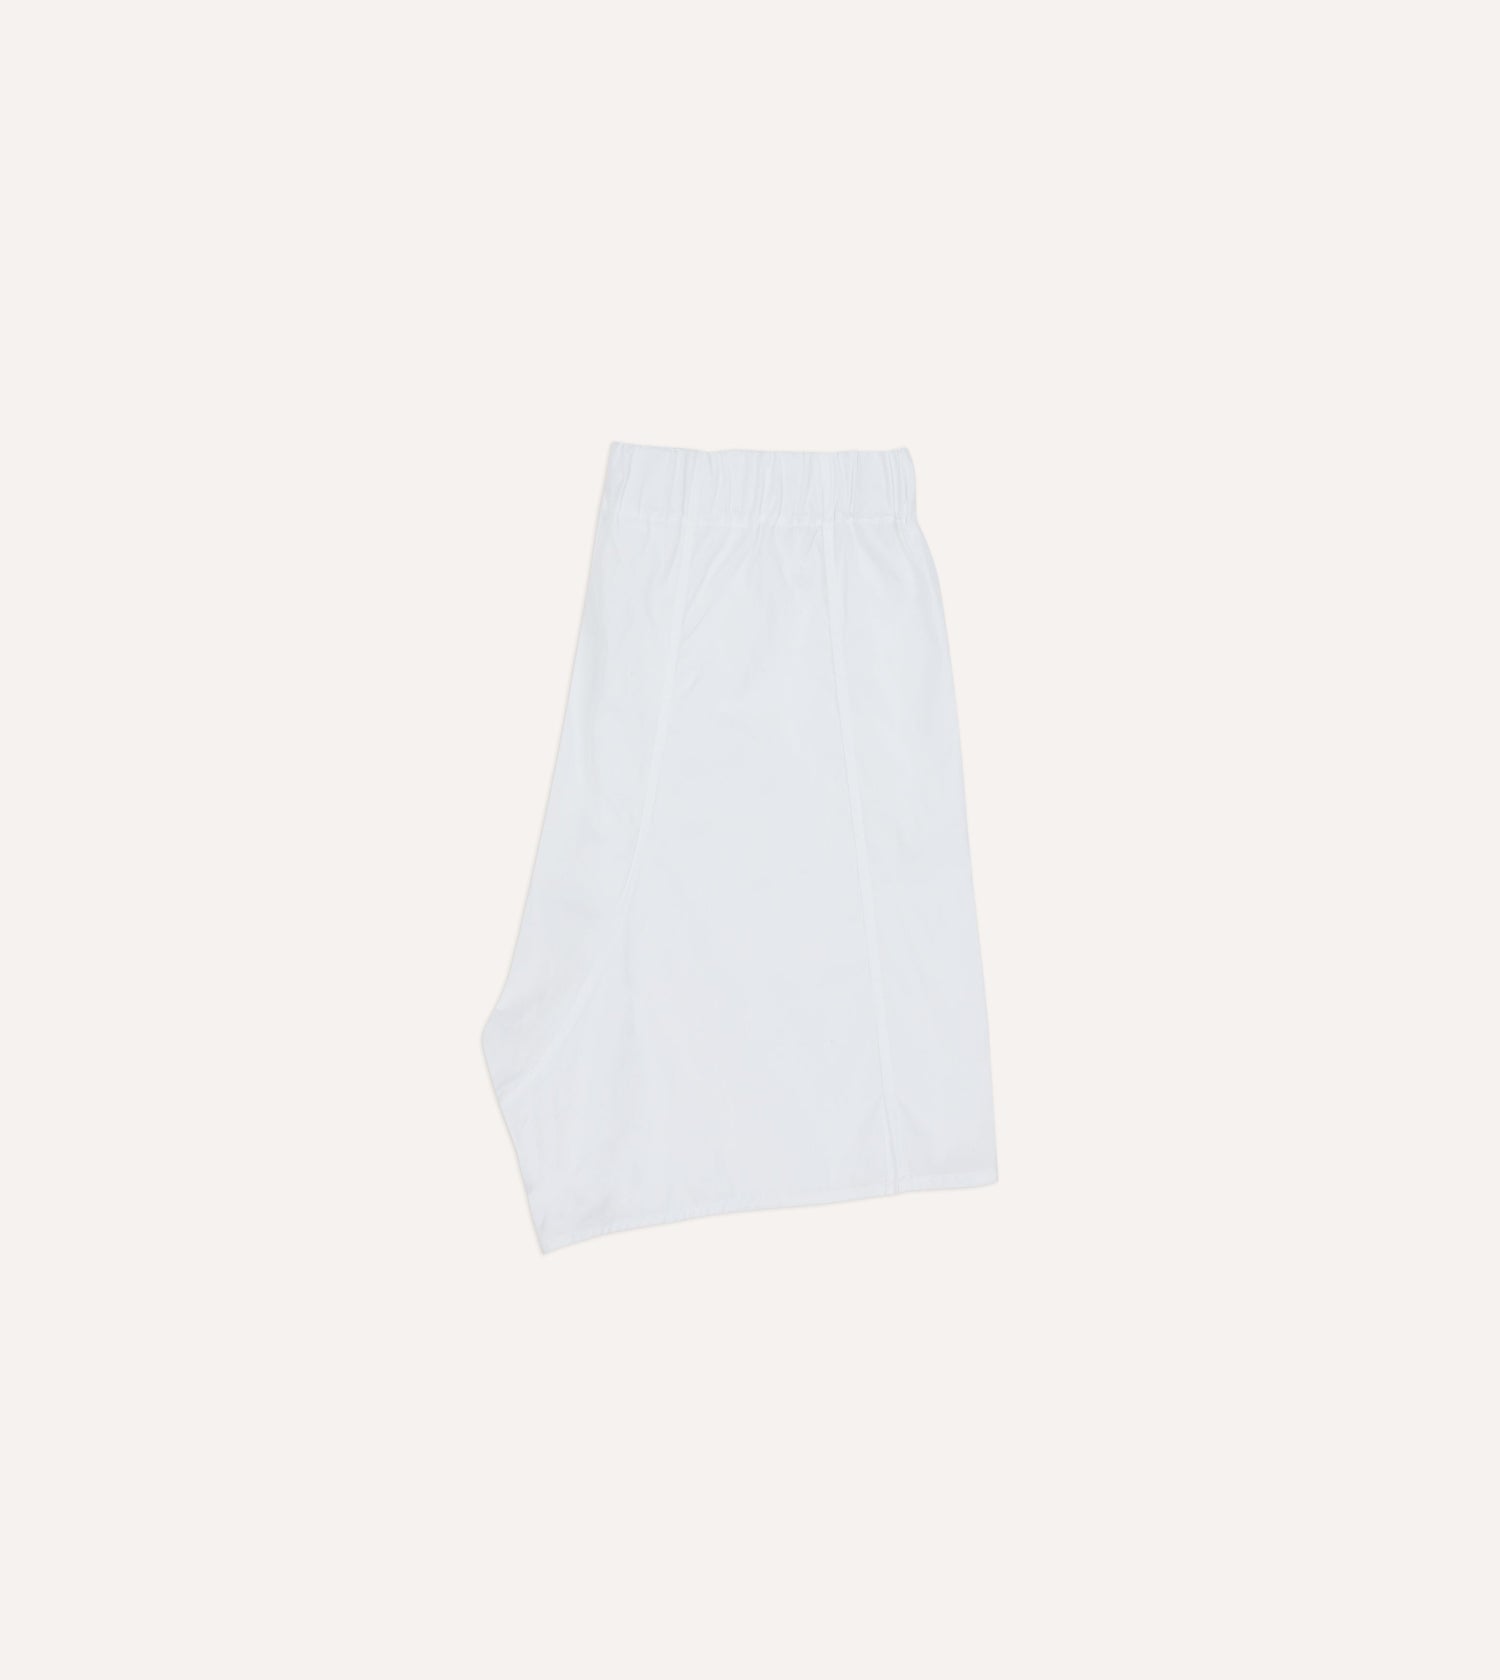 White Cotton Poplin Boxer Shorts